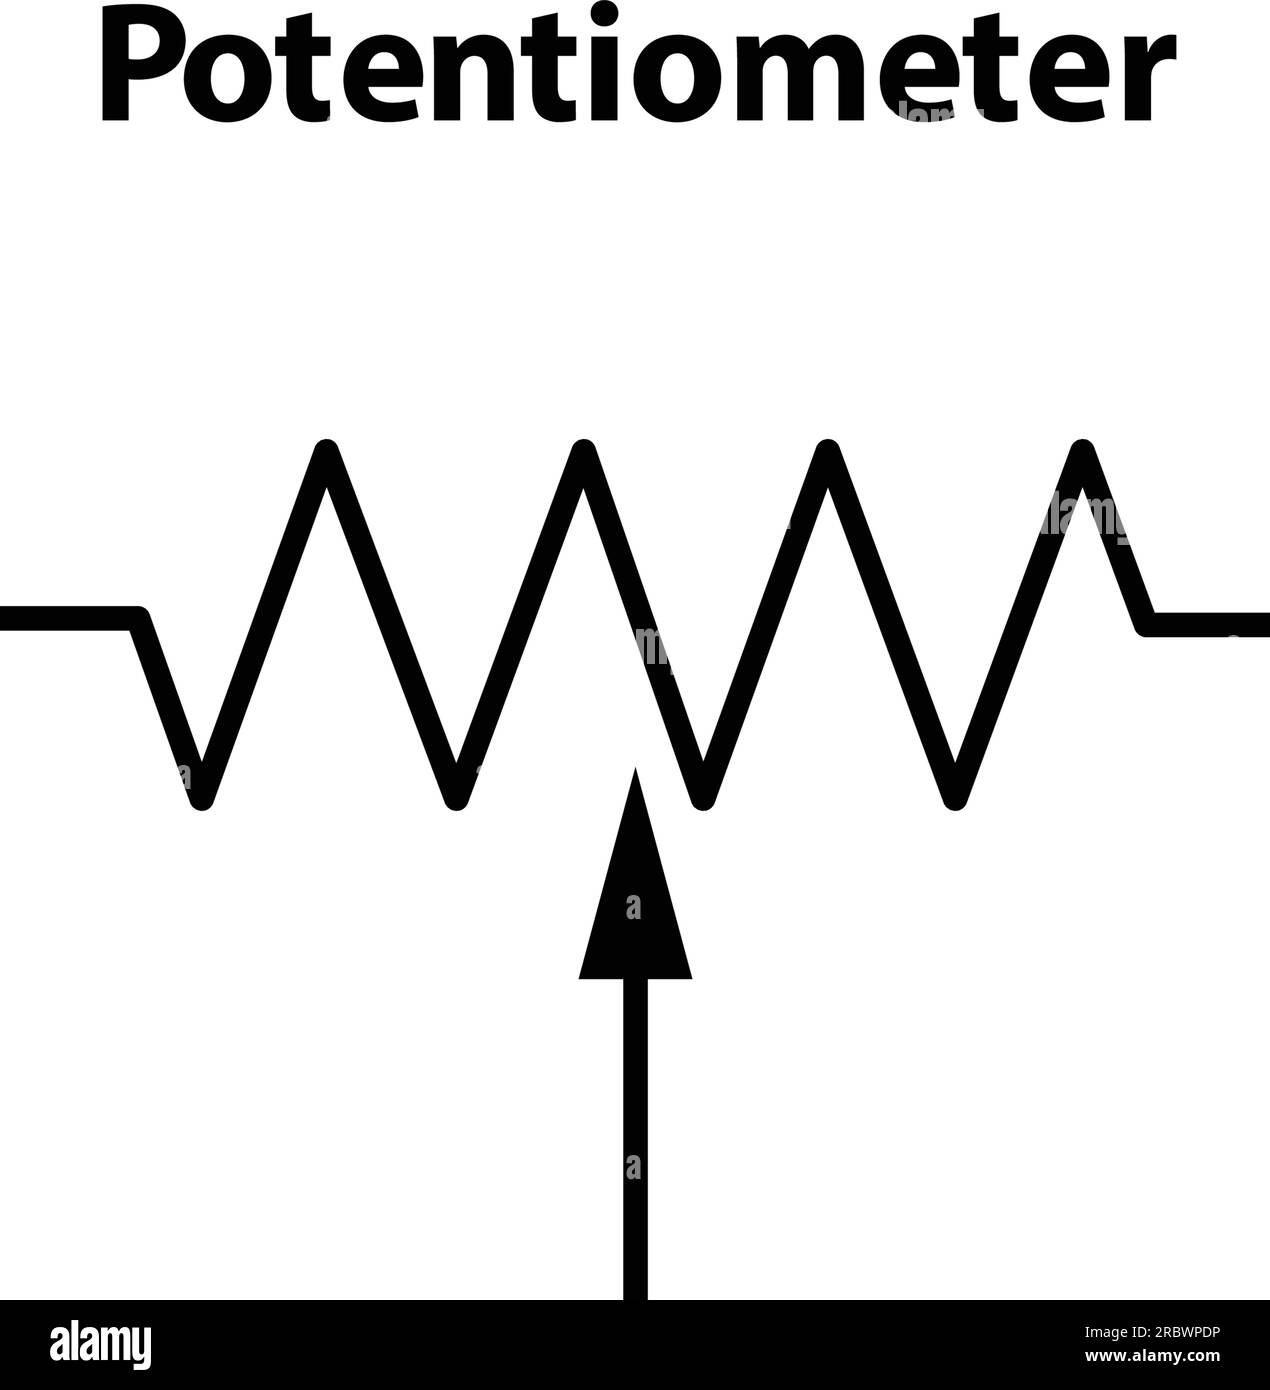 potentiometer electronics symbol of  Illustration of basic circuit symbols. Electrical symbols, study content of physics students. Potentiometer. Stock Vector